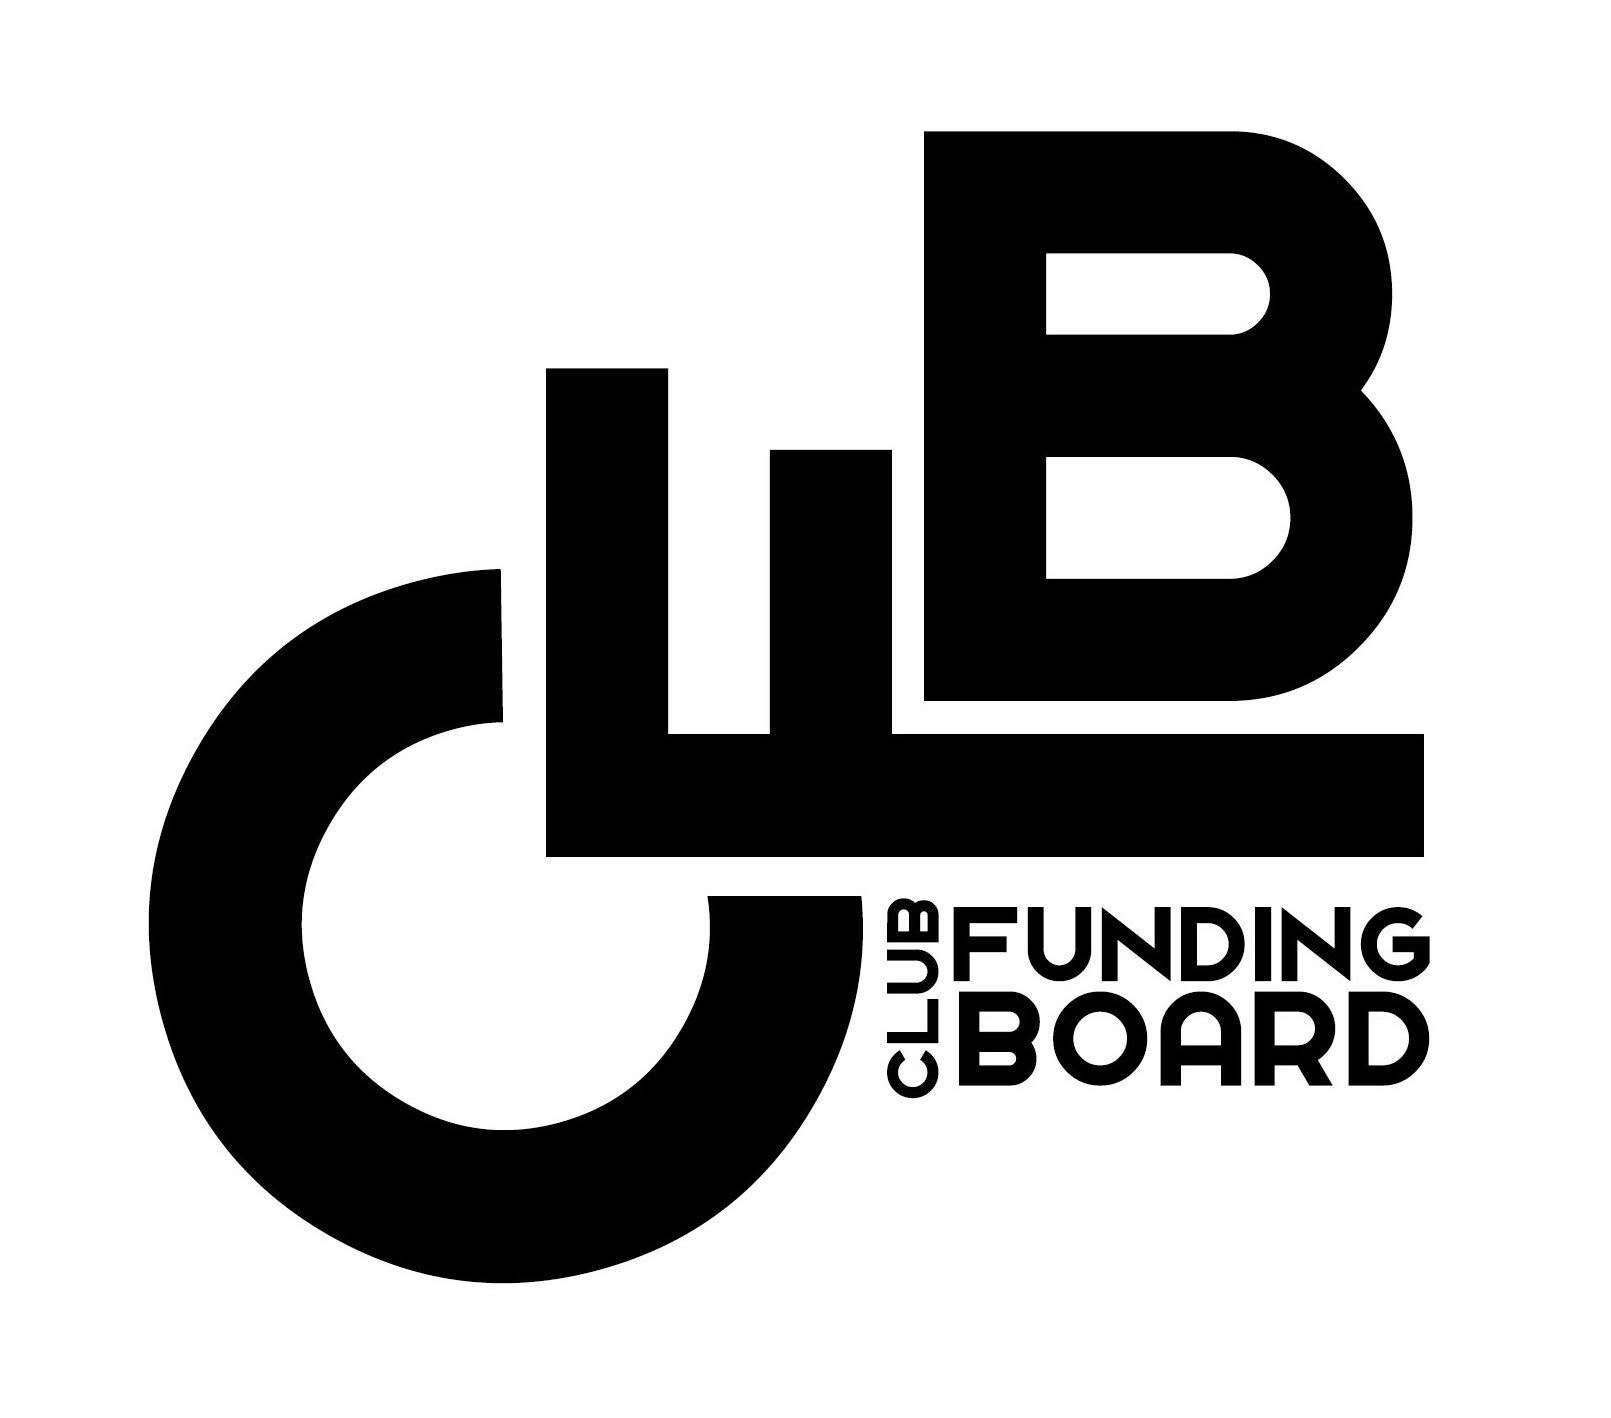 Club Funding 